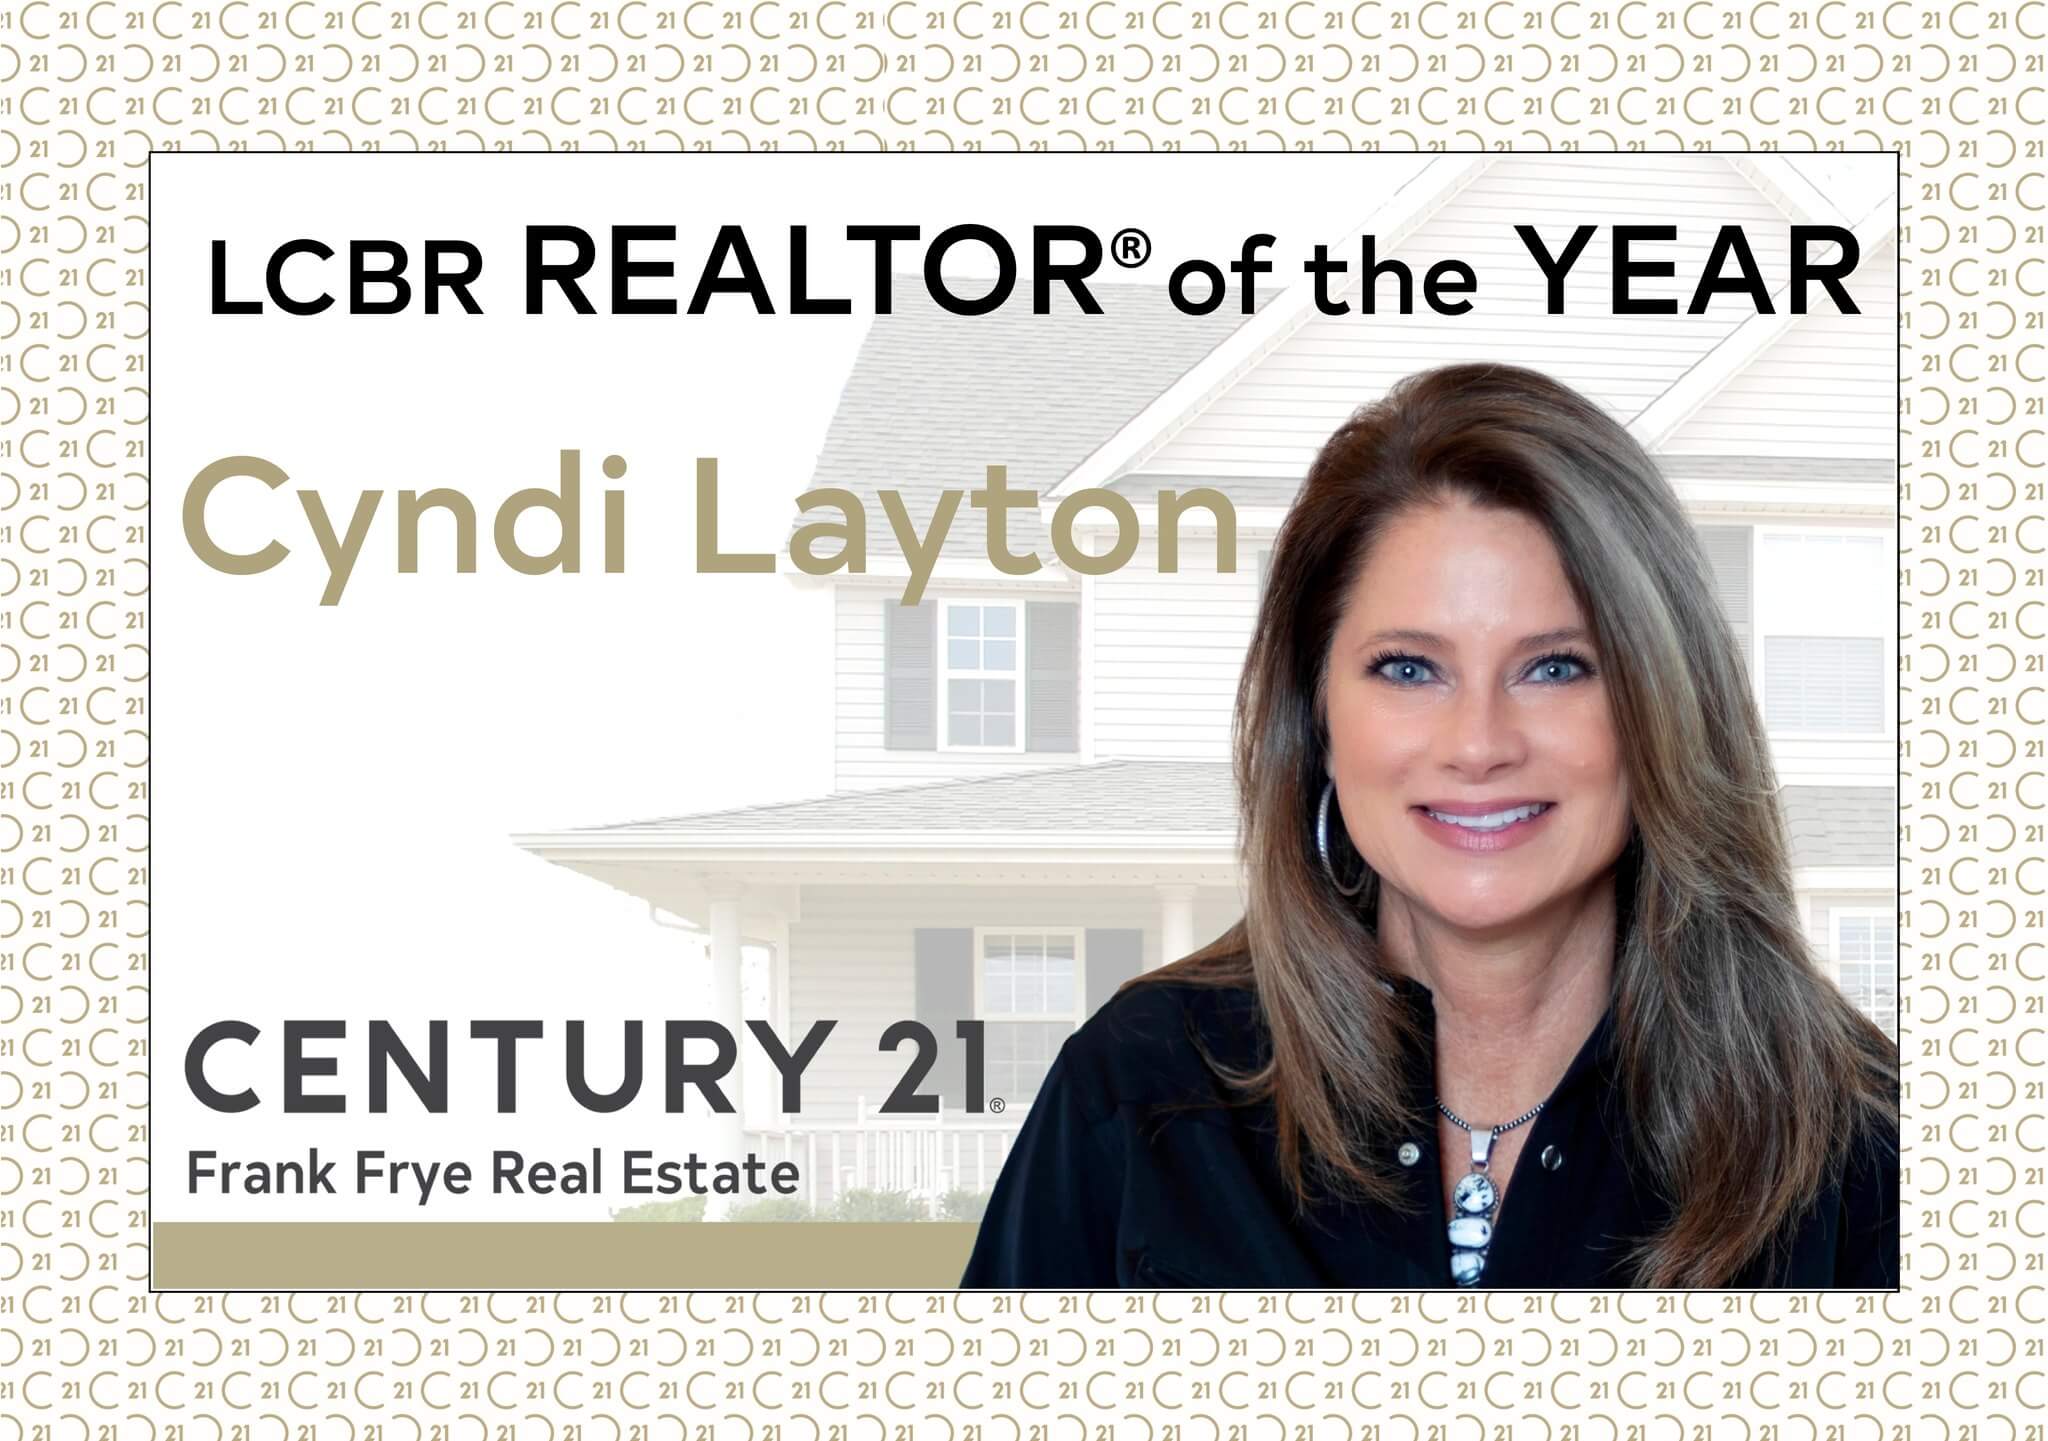 Cyndi Layton realtor of the year award